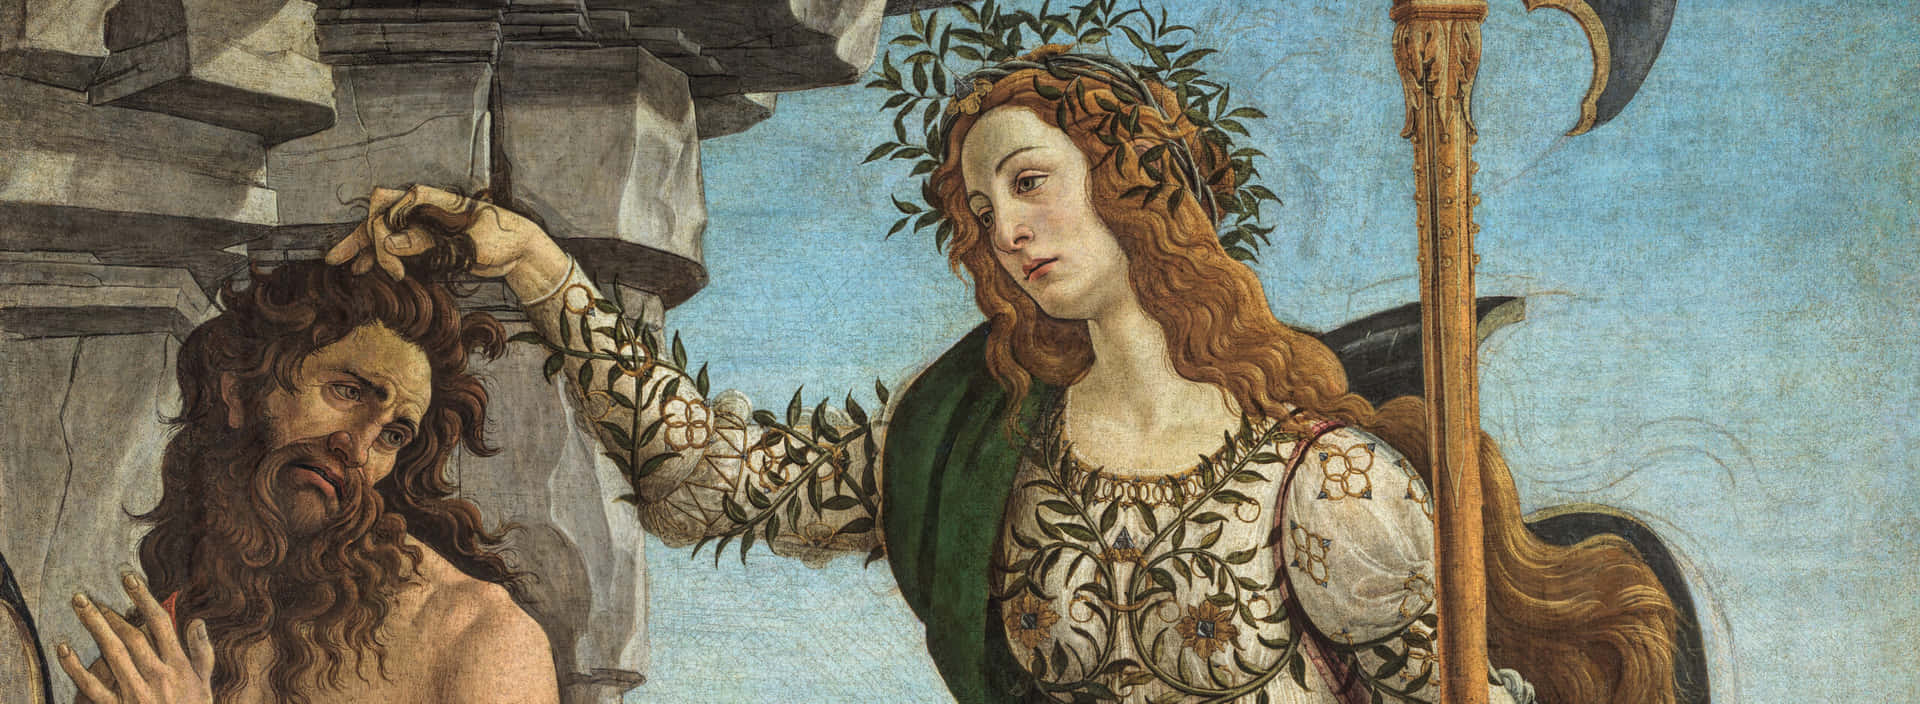 A classic painting depicting a beautiful Renaissance courtesan